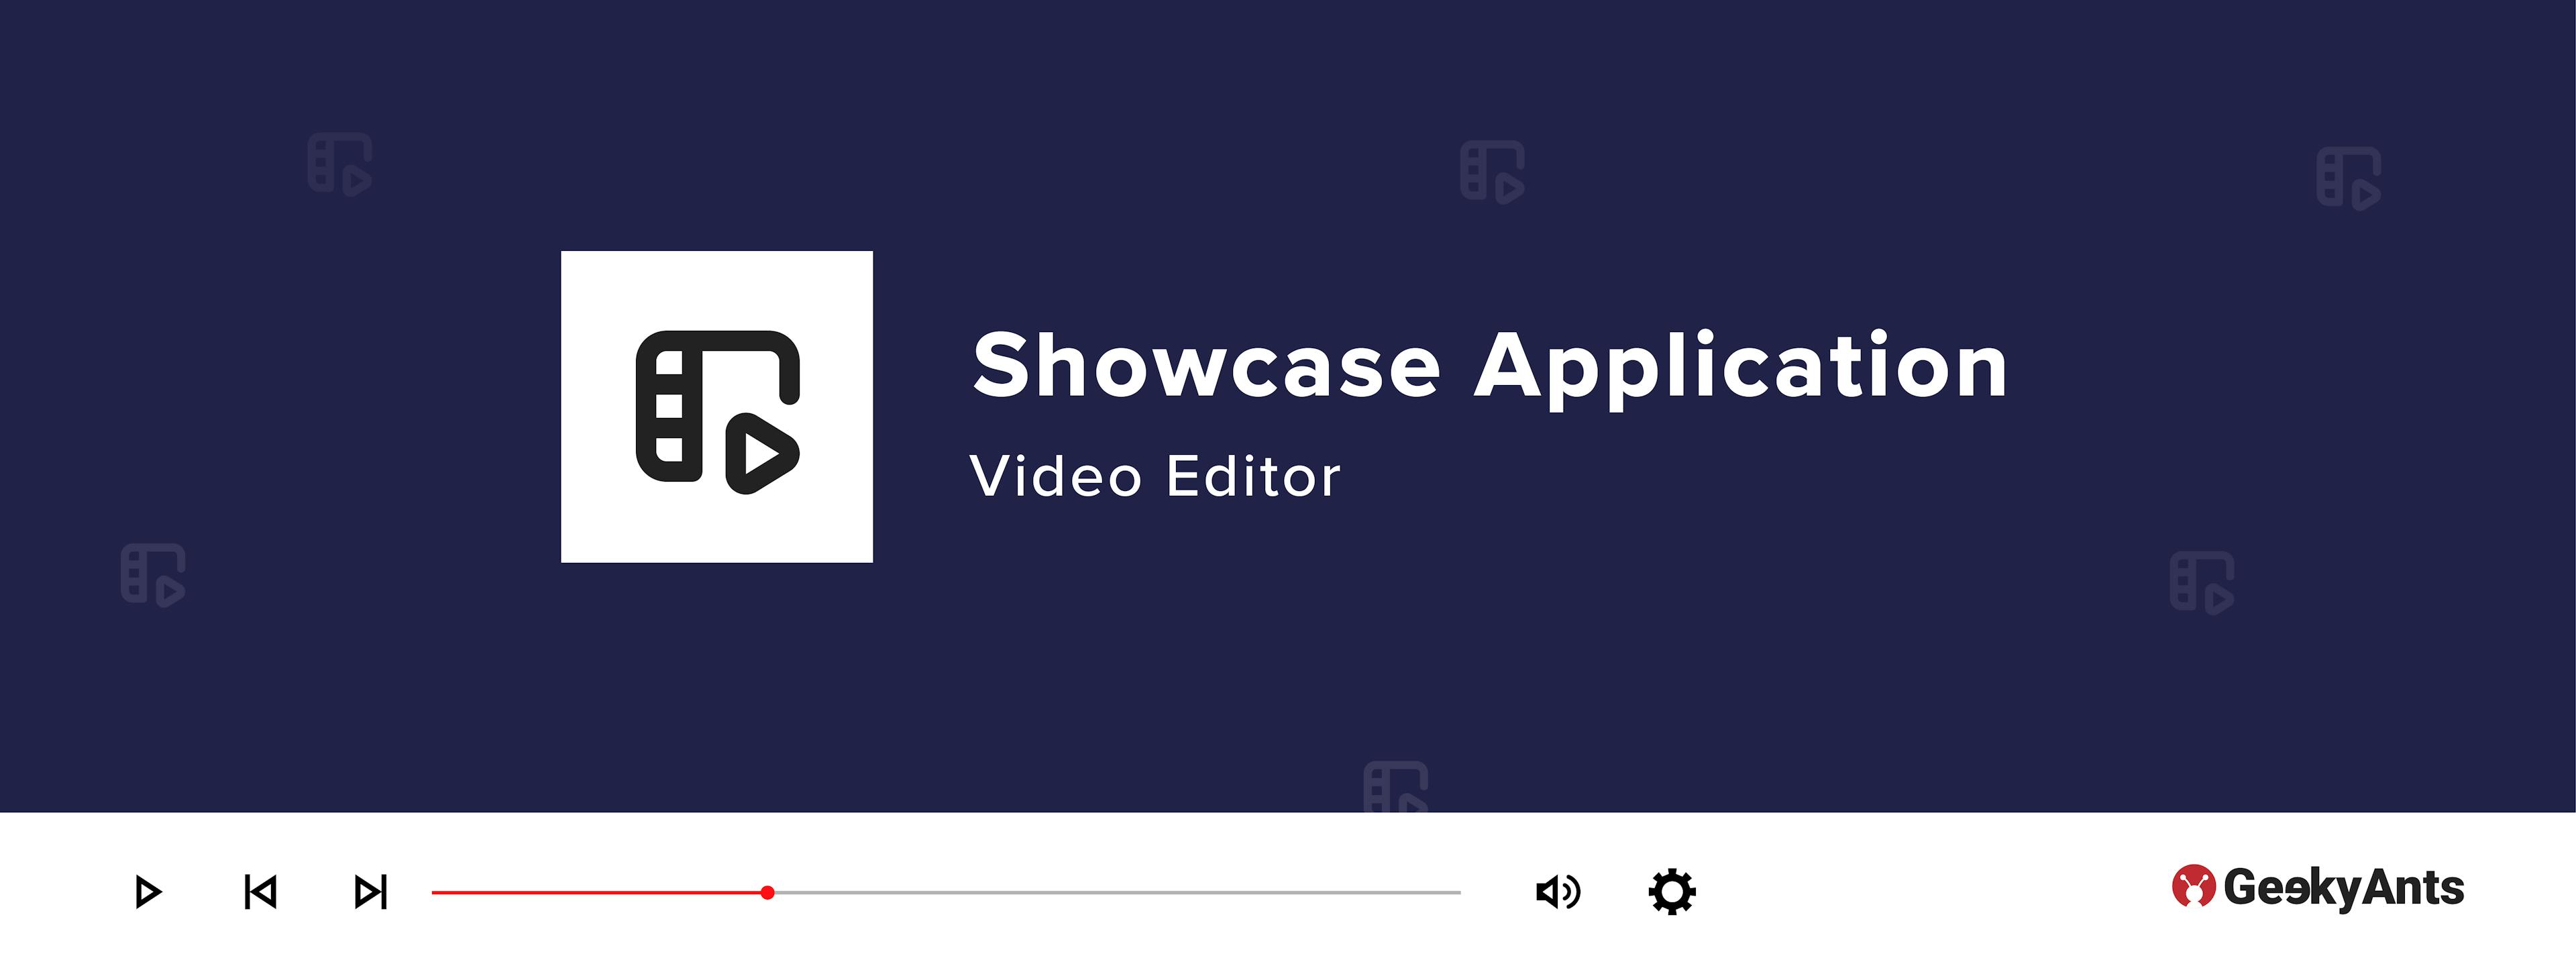 Showcase Applications: Video Editor